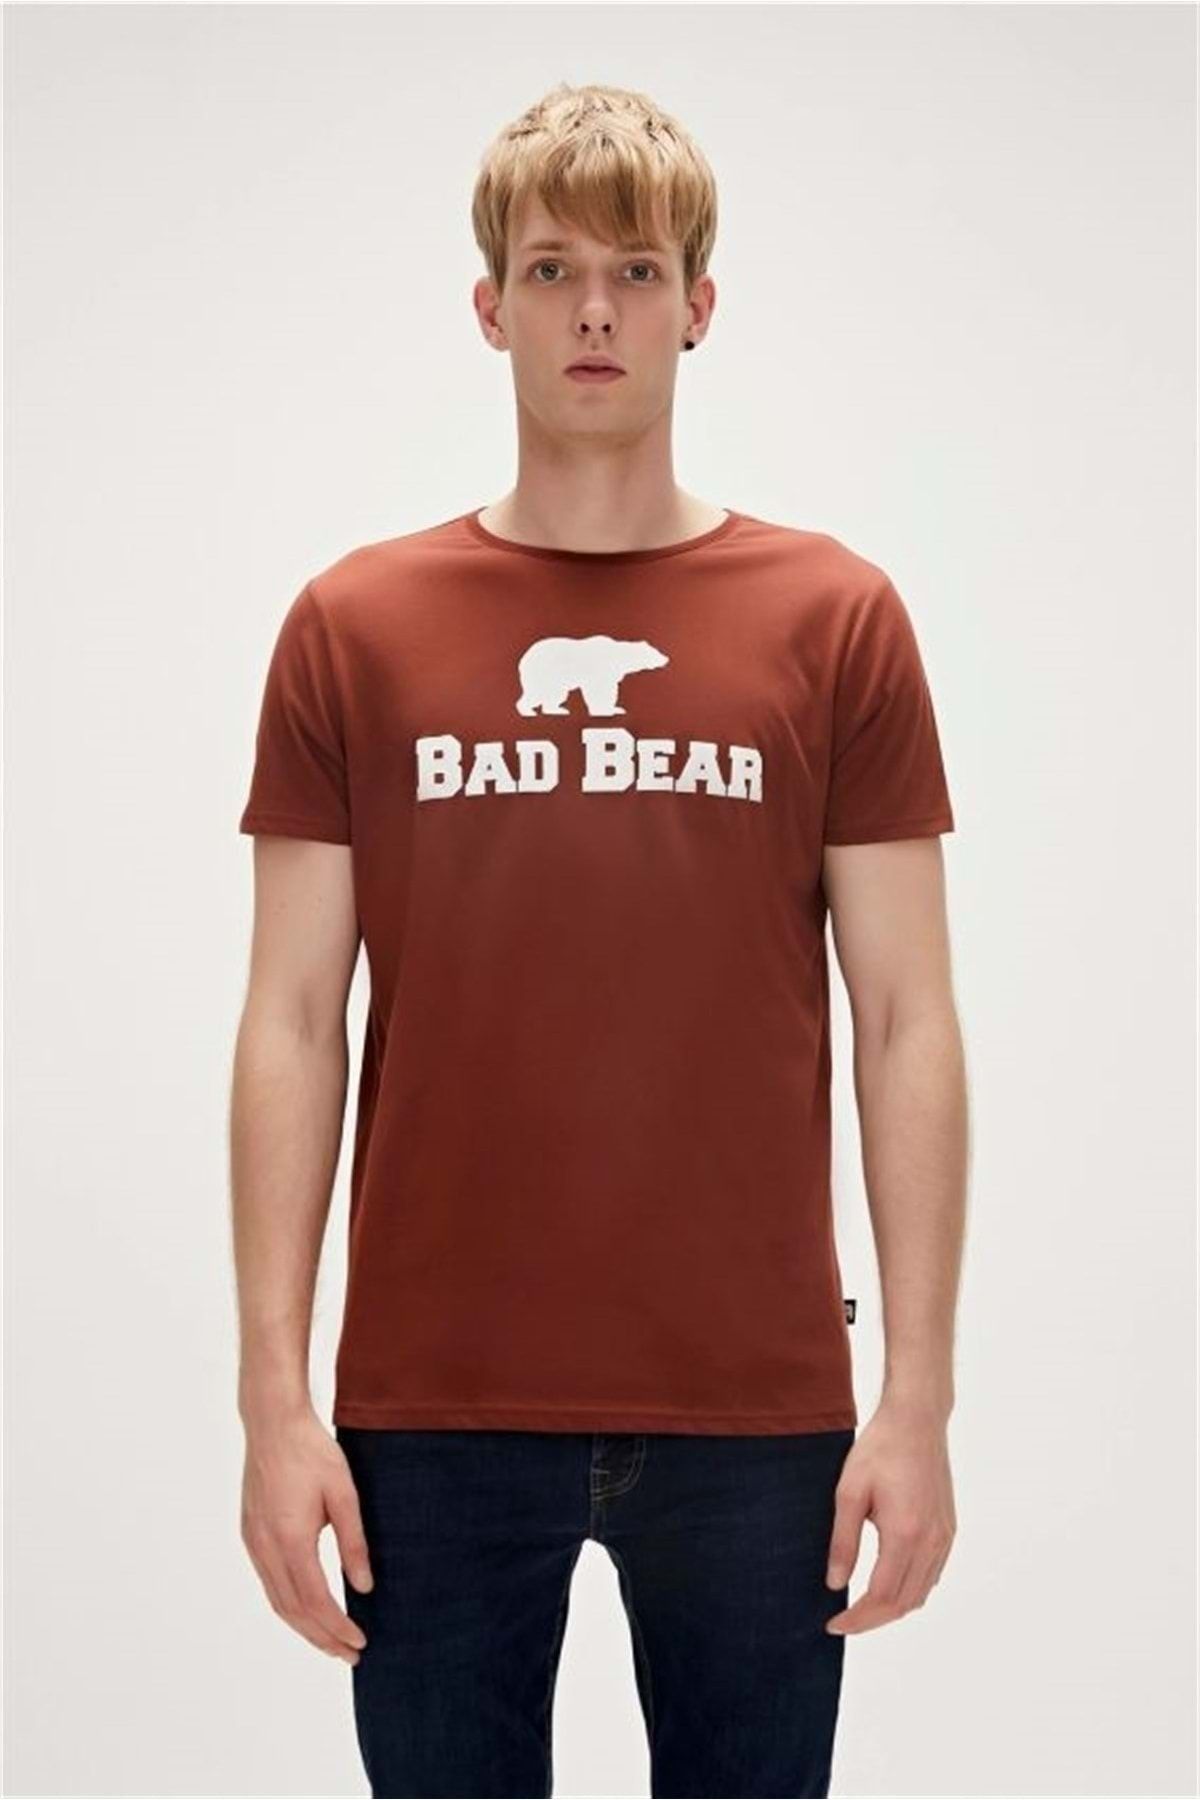 Bad Bear Tee Baskılı Yazılı T-shırt - Kahverengi - M - St06067-kahverengi-m